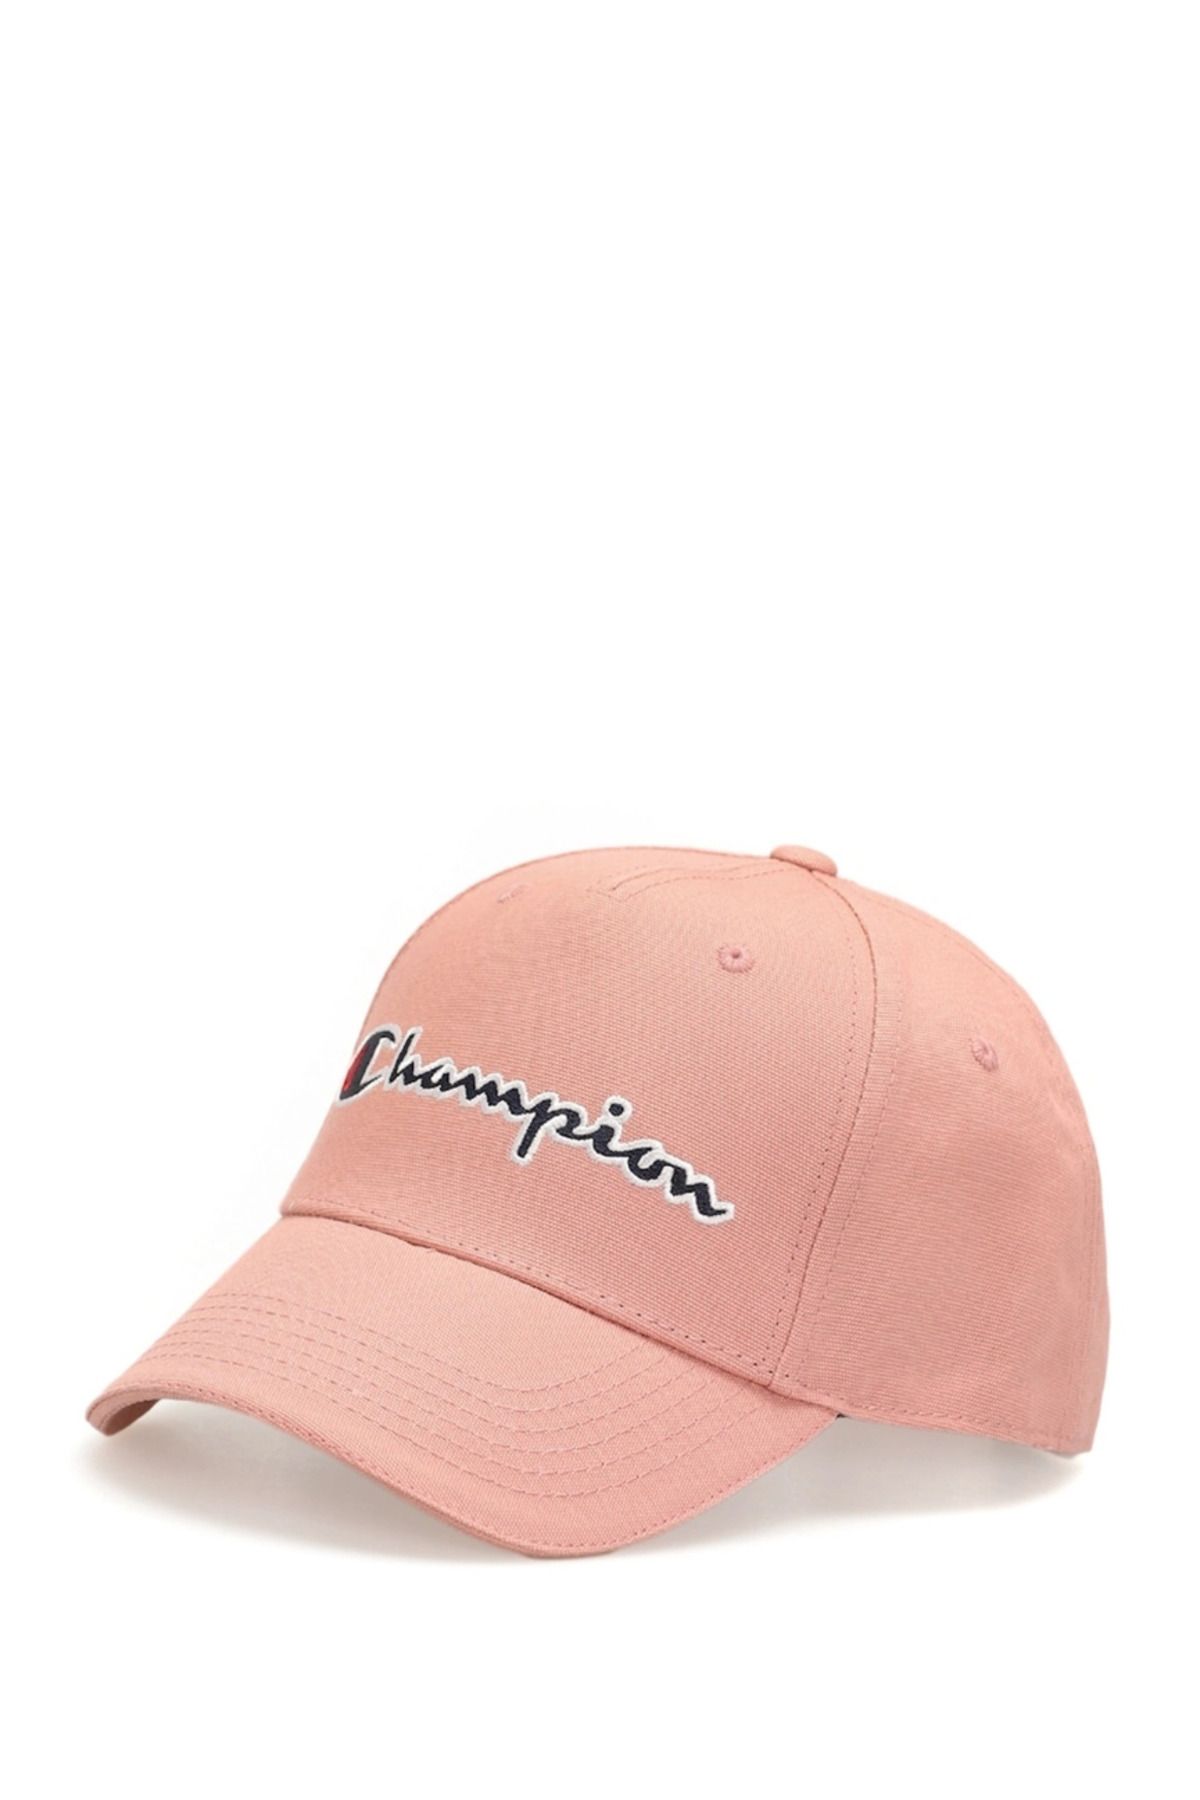 Champion Script Cap Hat in Peculiar Pink